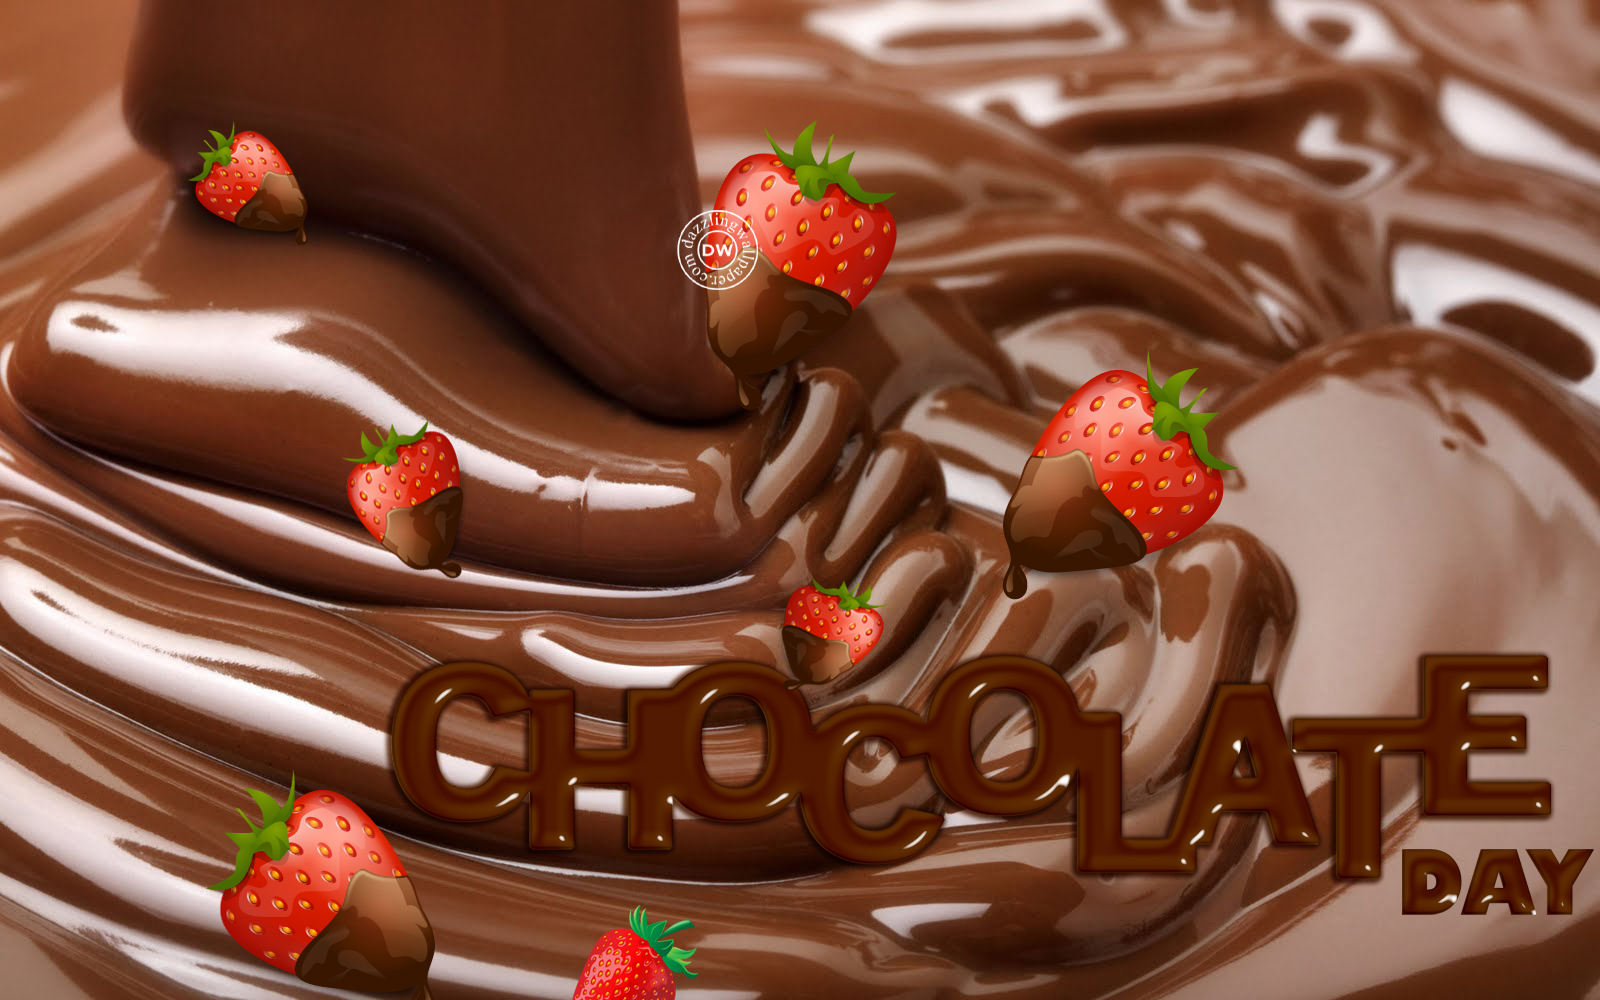 Chocolate Hd Image Download - HD Wallpaper 